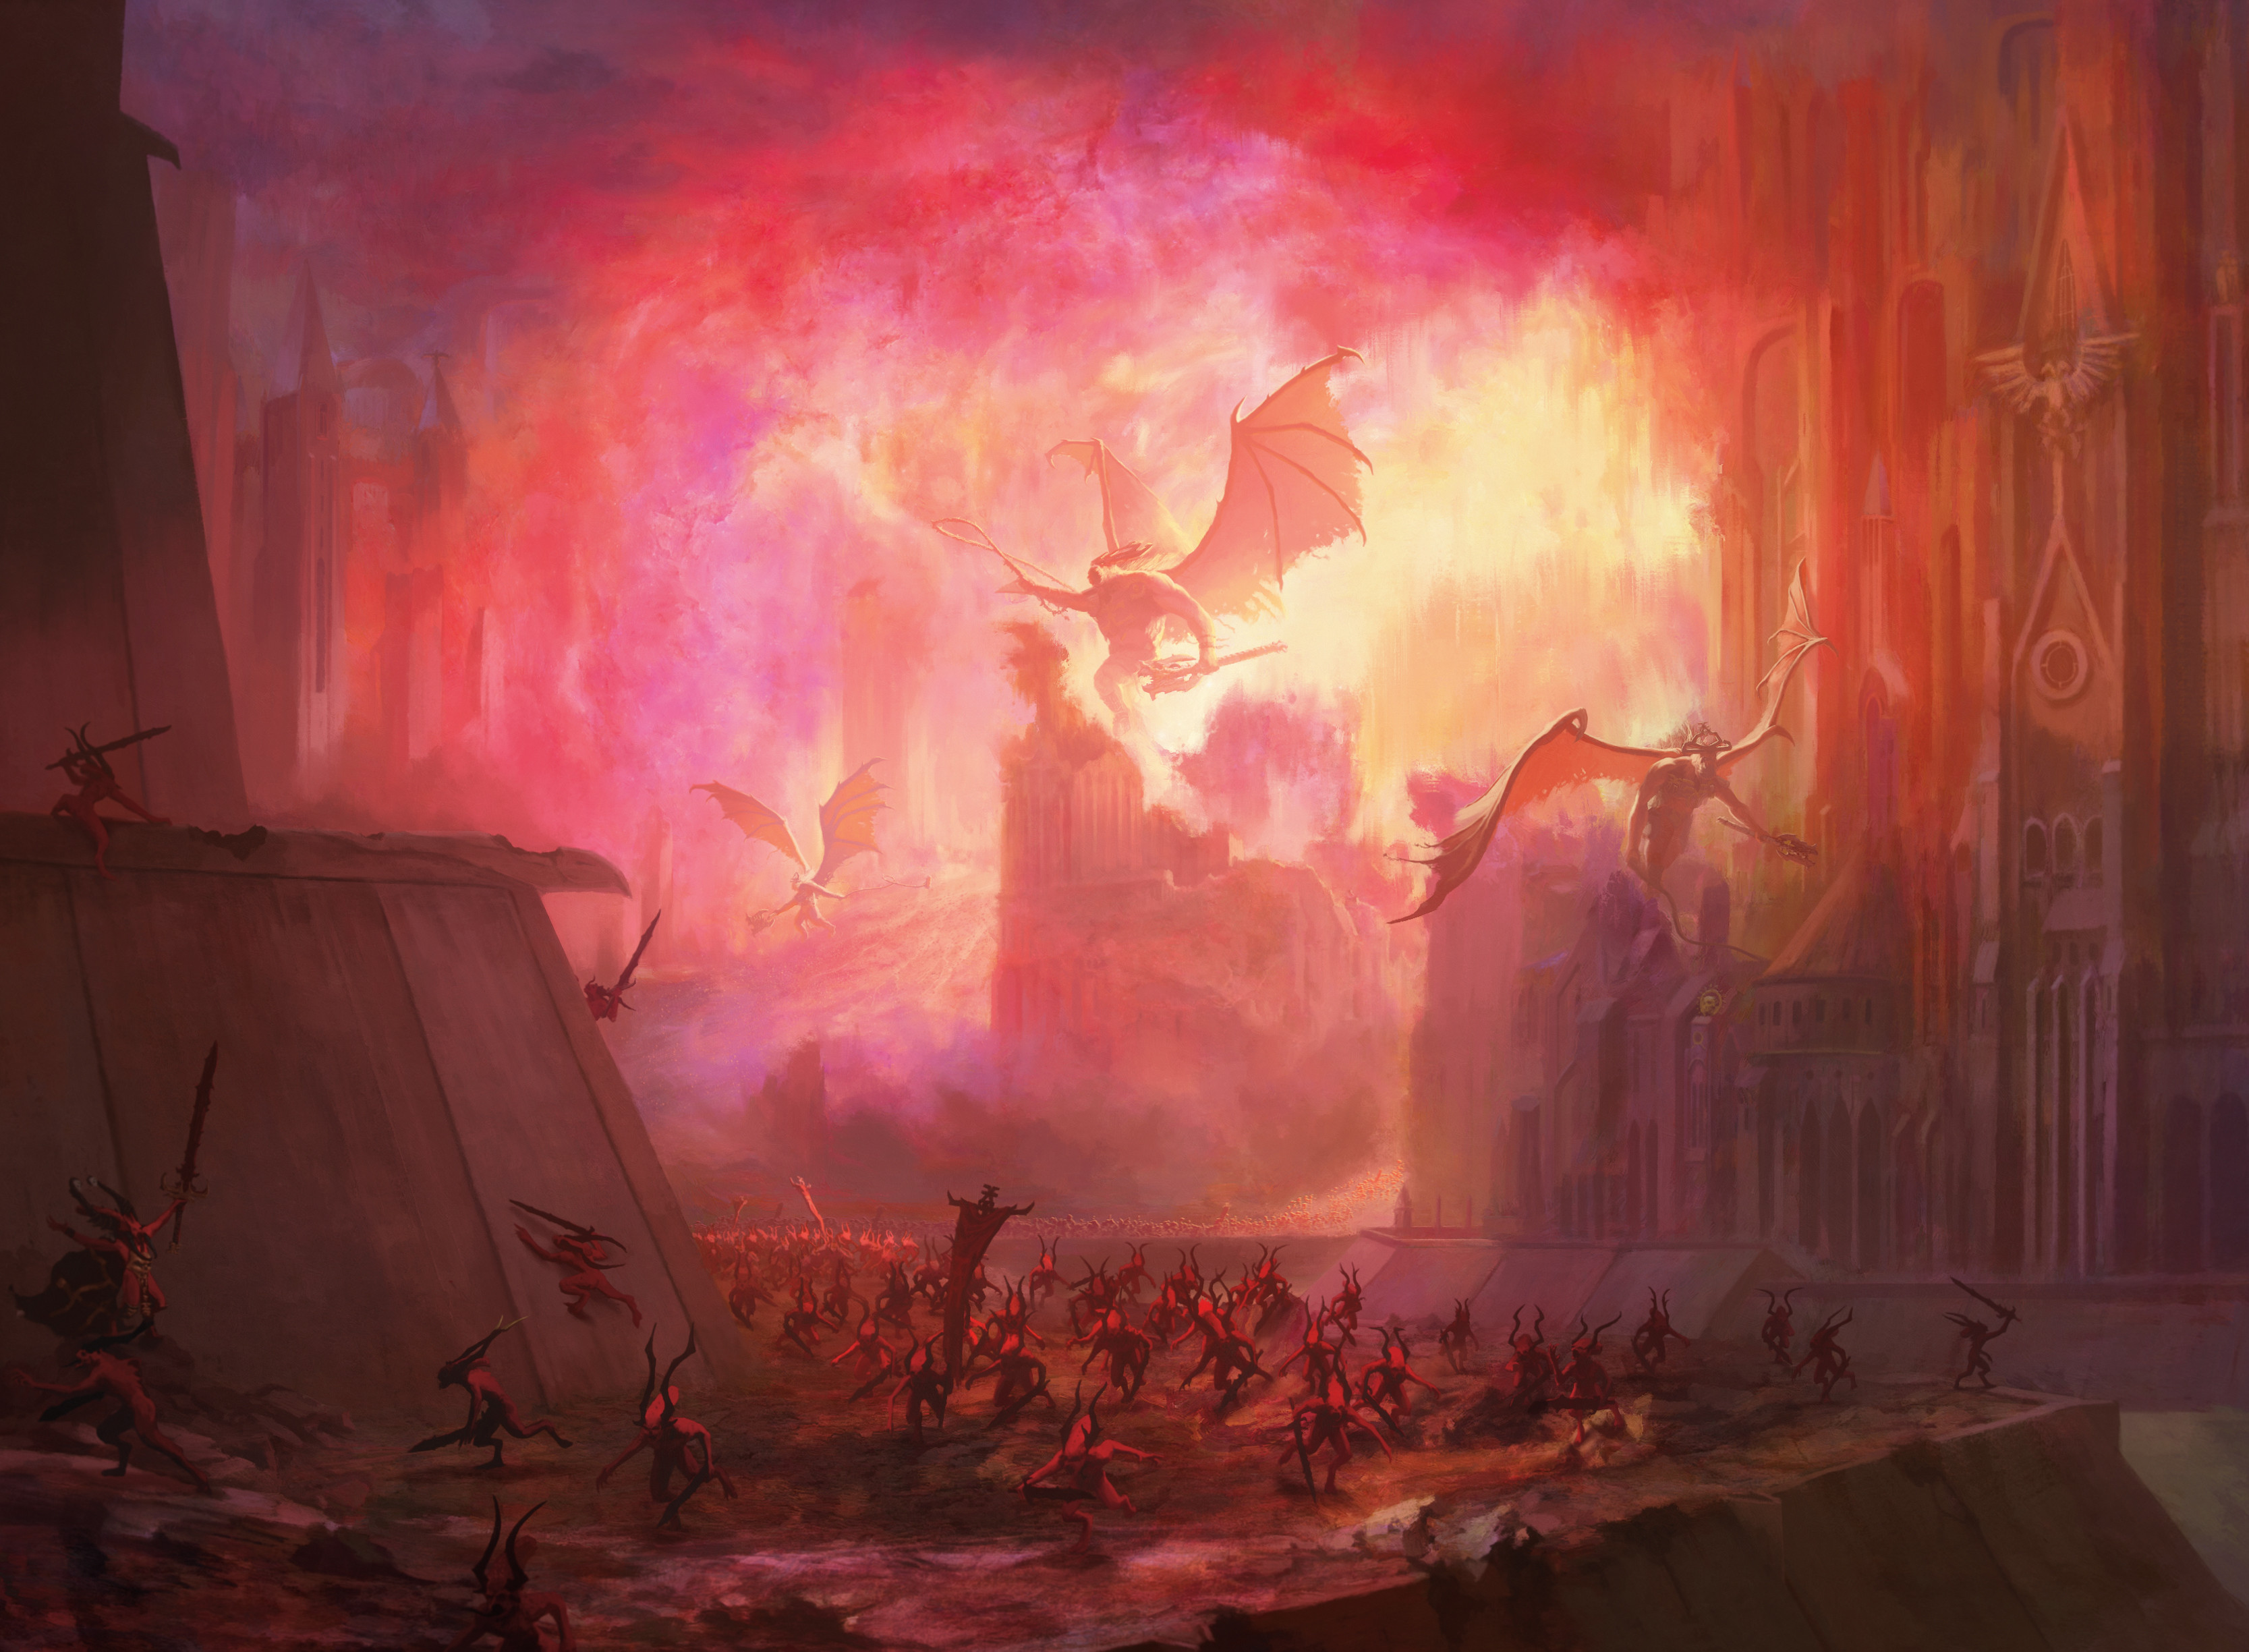 Science Fiction High Tech Warhammer 40 000 Chaos Deamons Storm Portals Invasion City Ruins Debris Ru 3334x2449